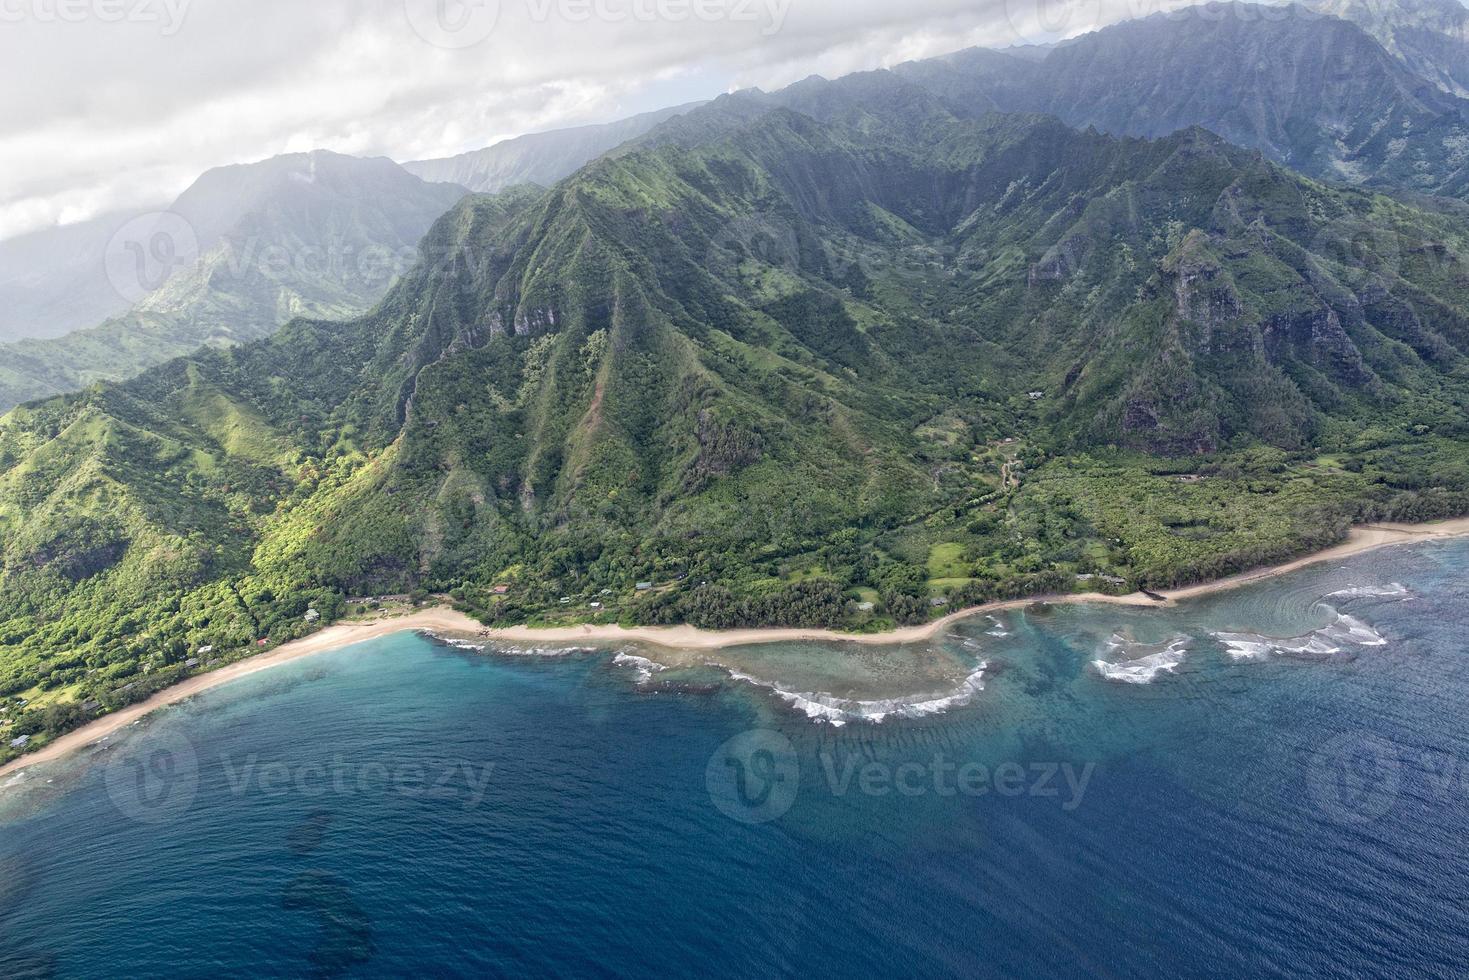 kauai napali coast aerial view photo